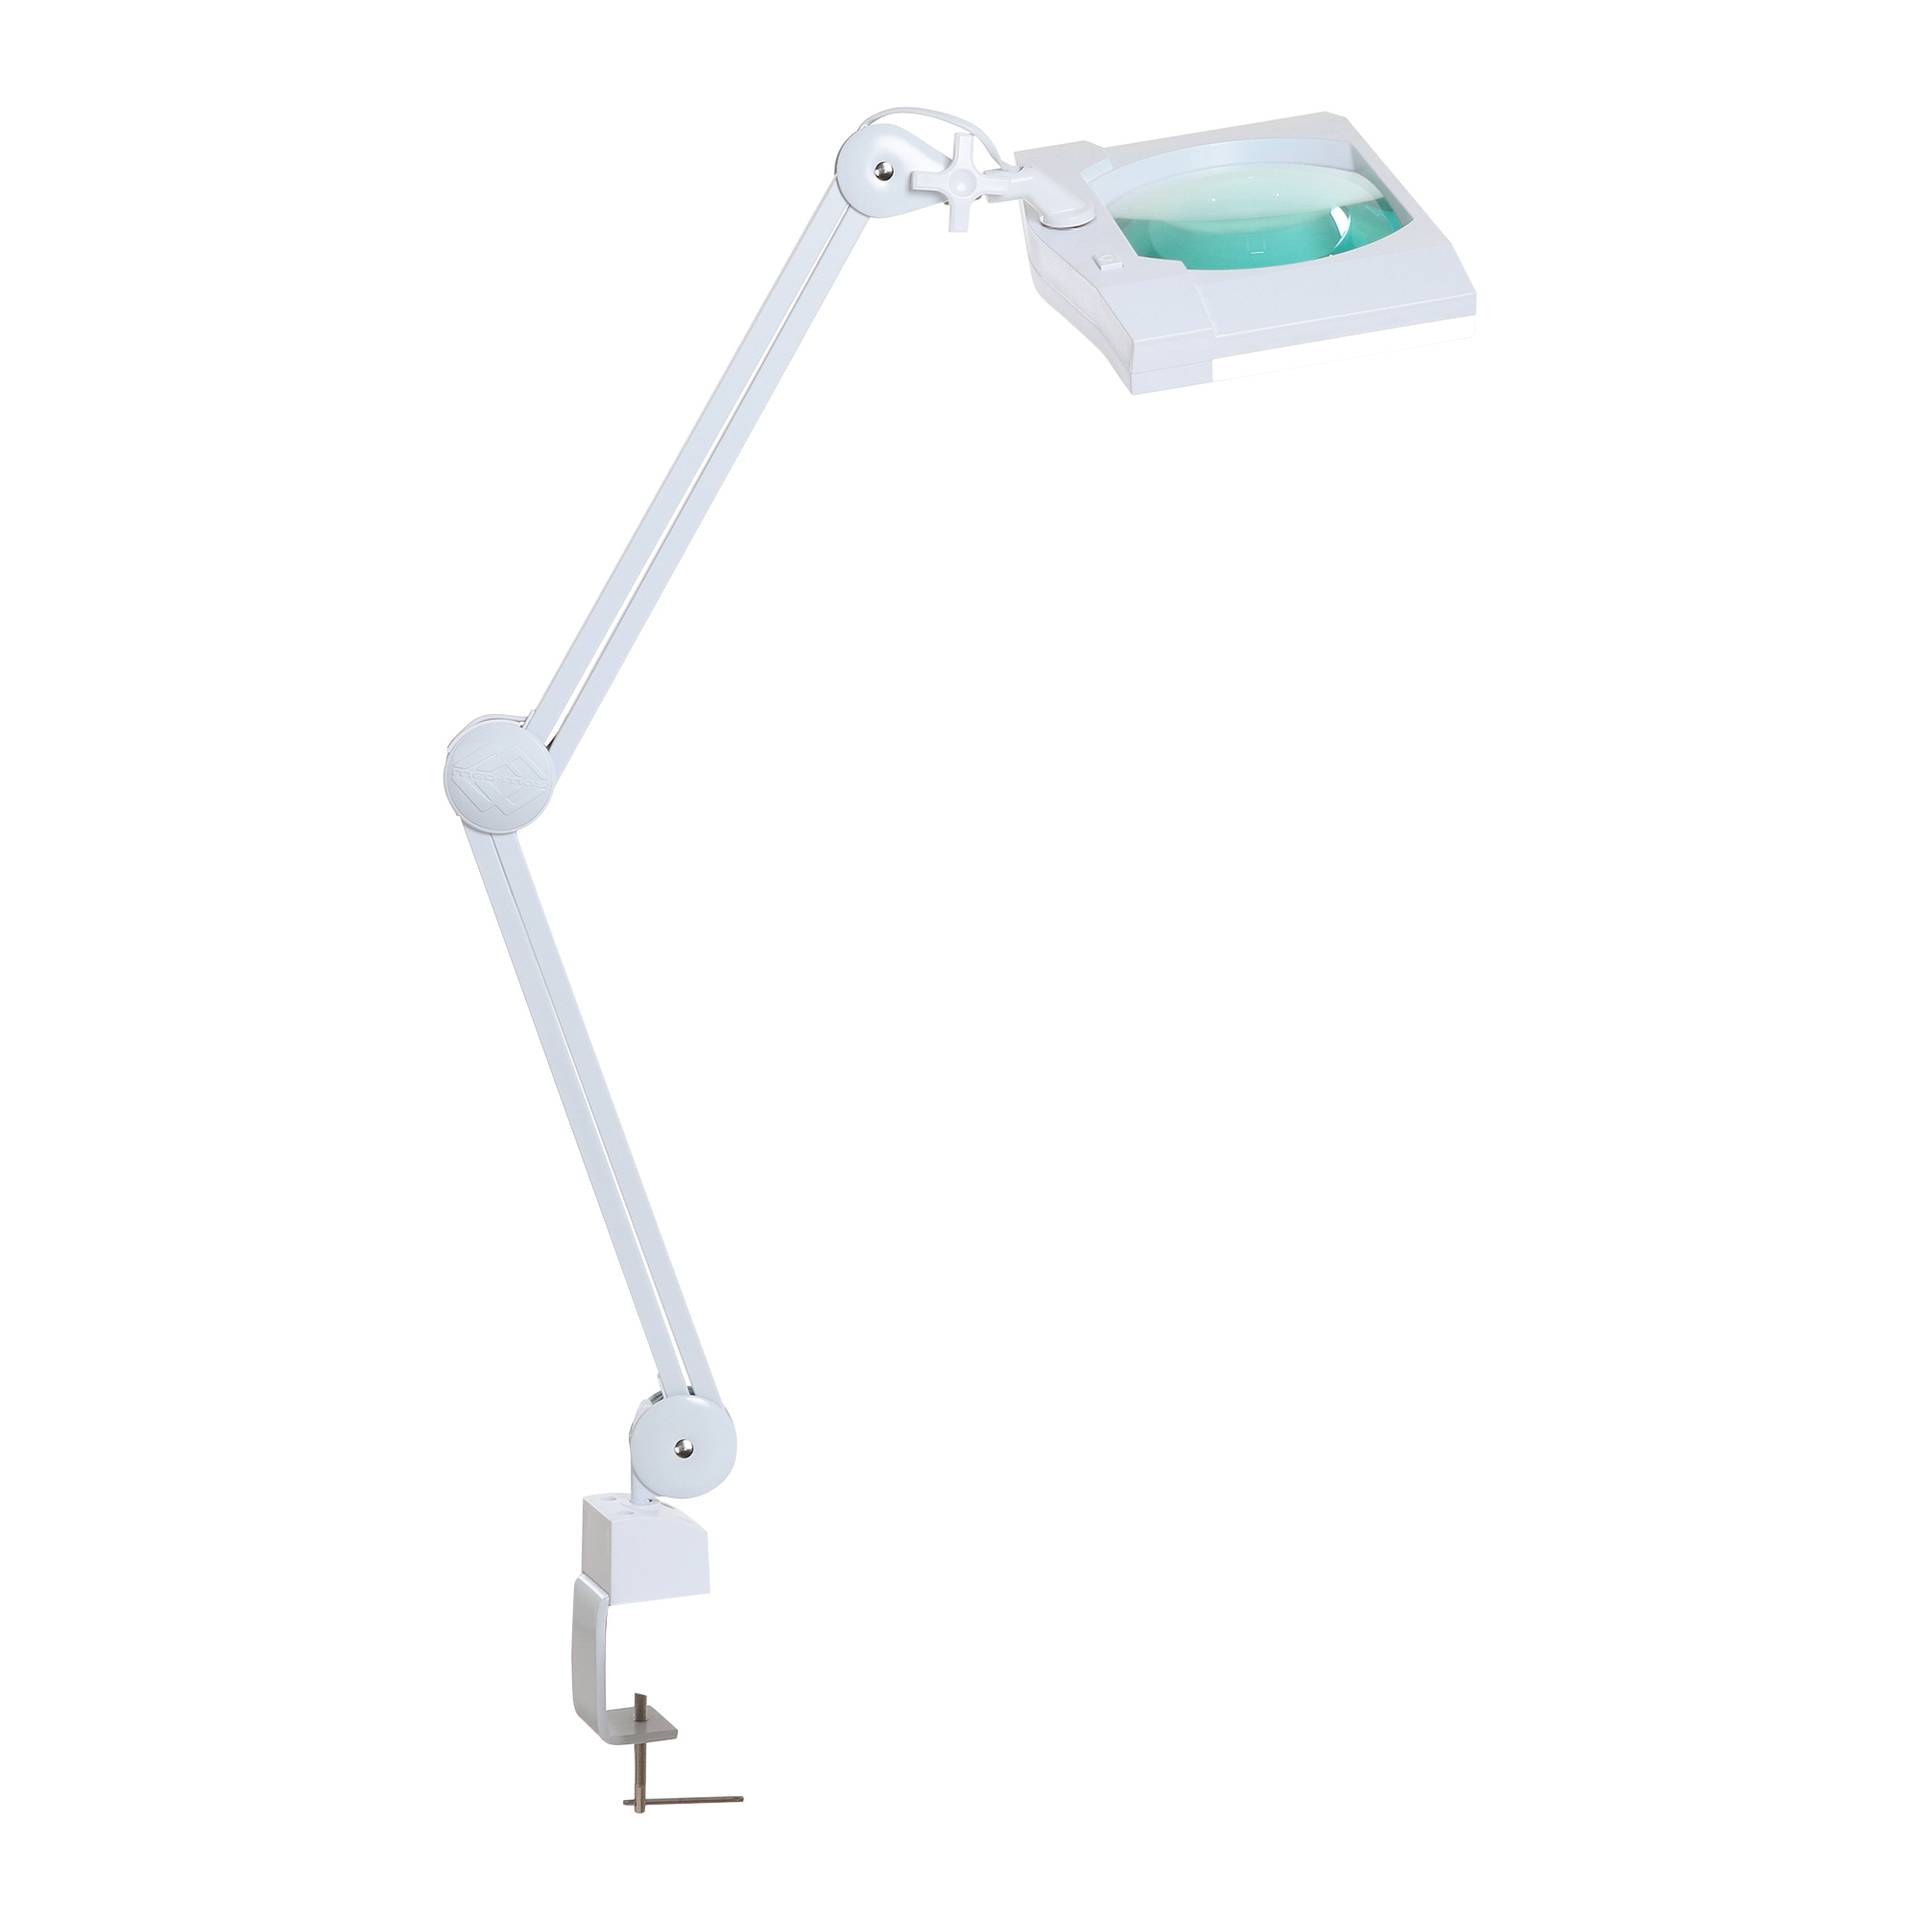 Лампа бестеневая с РУ (лампа-лупа) Med-Mos 9002LED-FS (9002LED-D-Ш4), П-образная, увеличенная площадь обзора - 3 